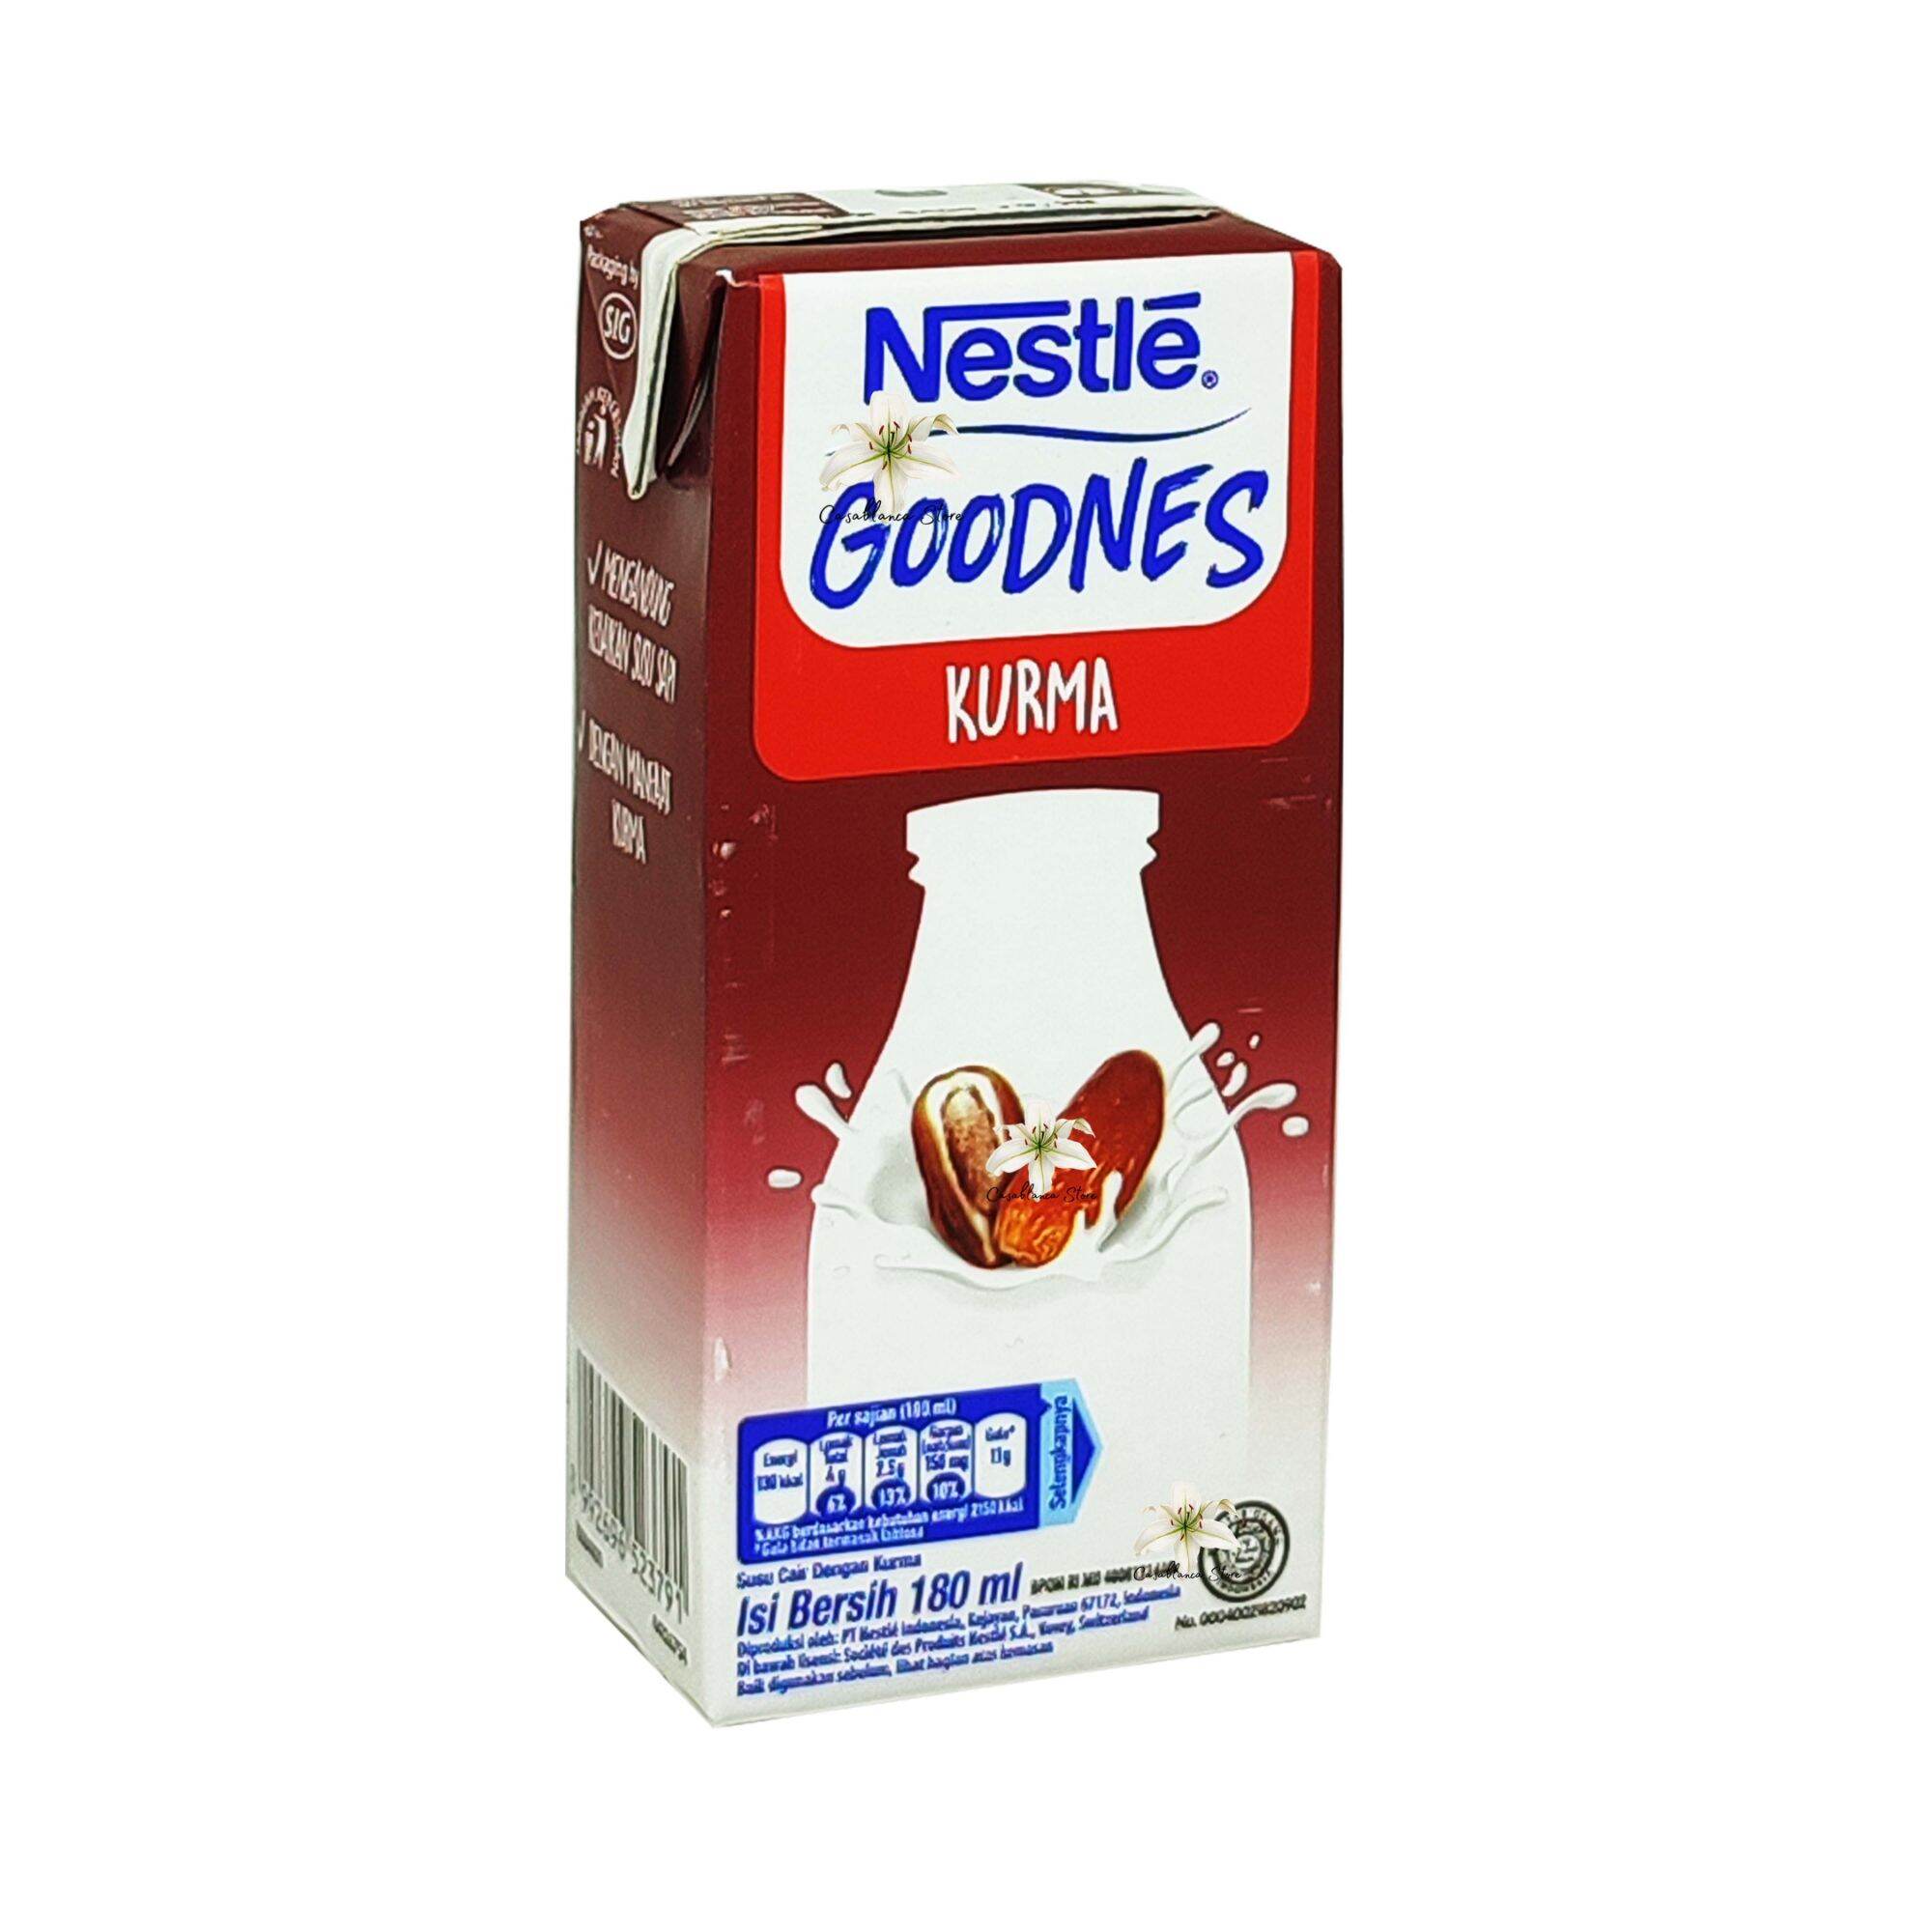 Nestle goodness kurma